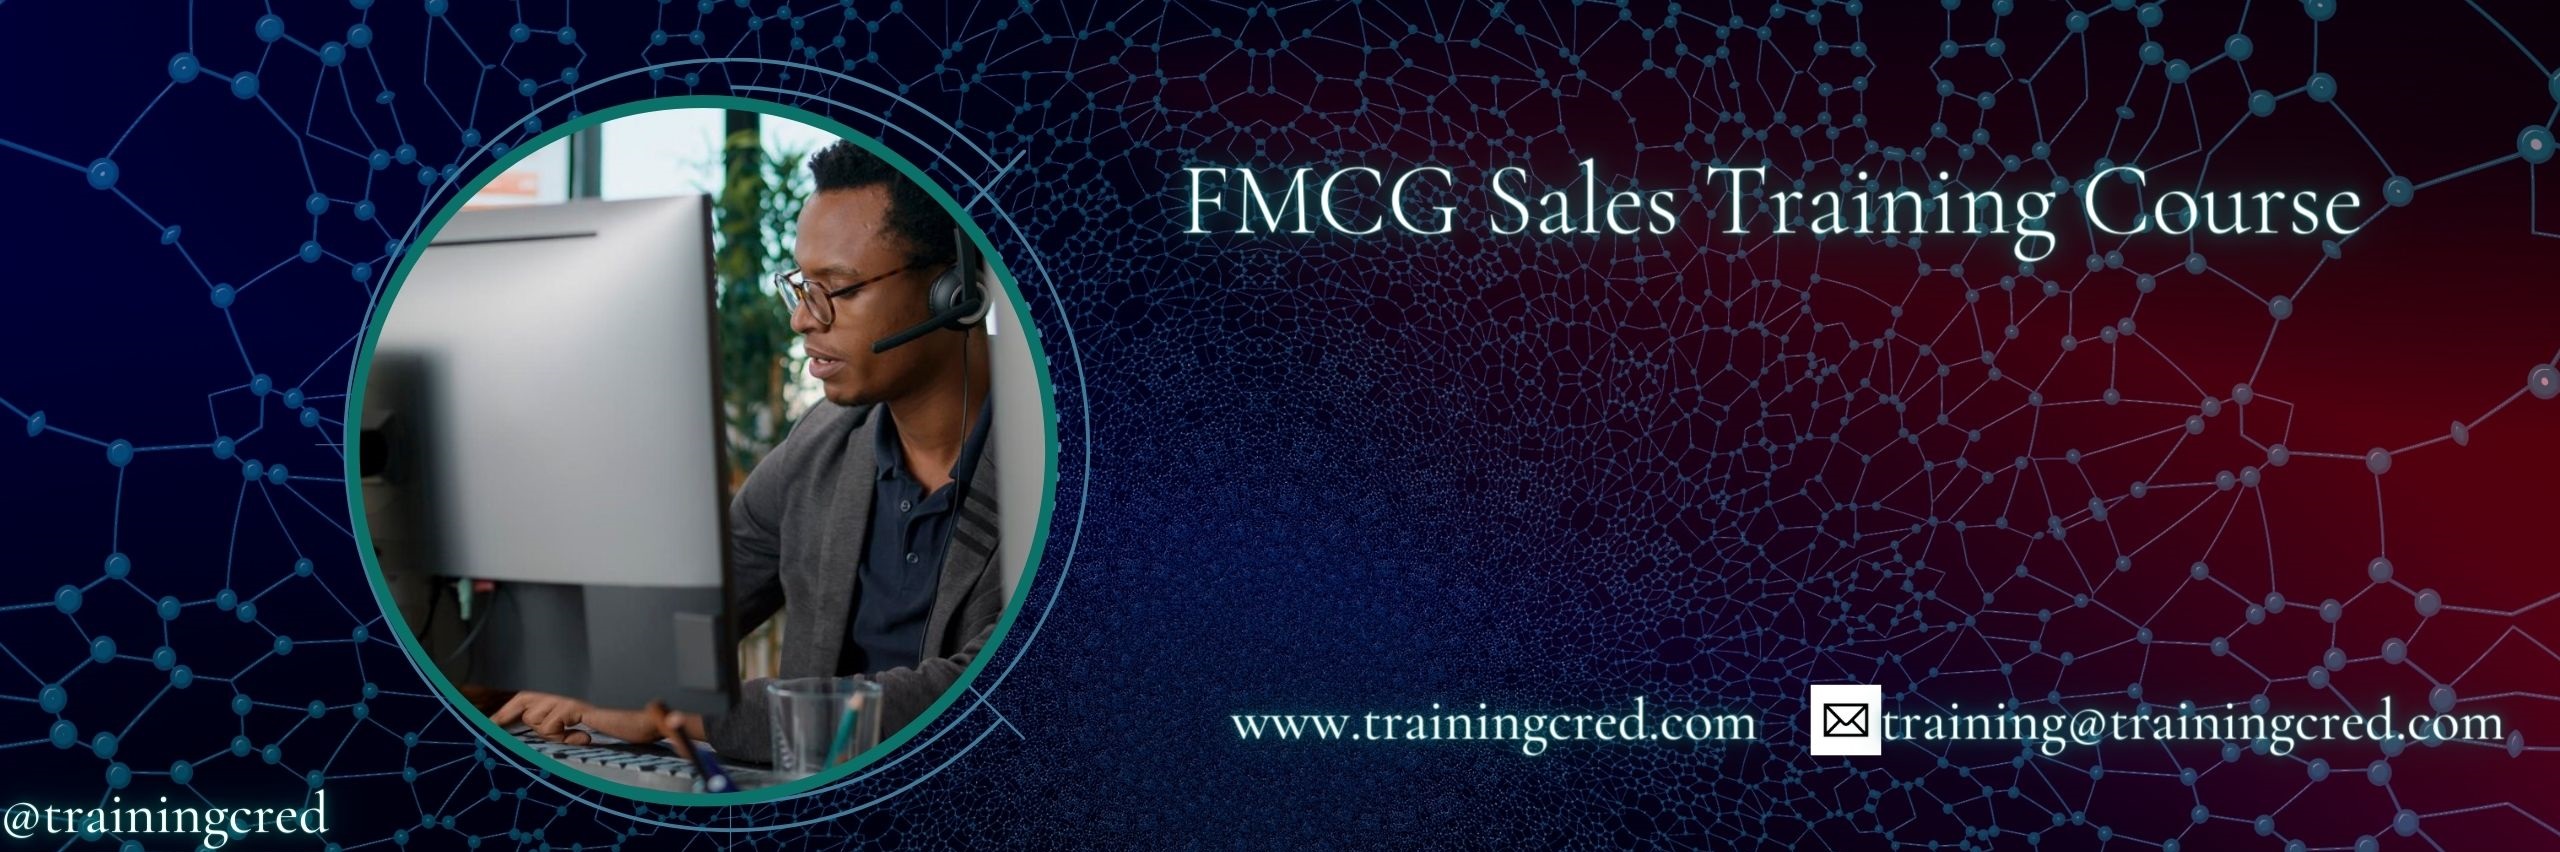 FMCG Sales Training